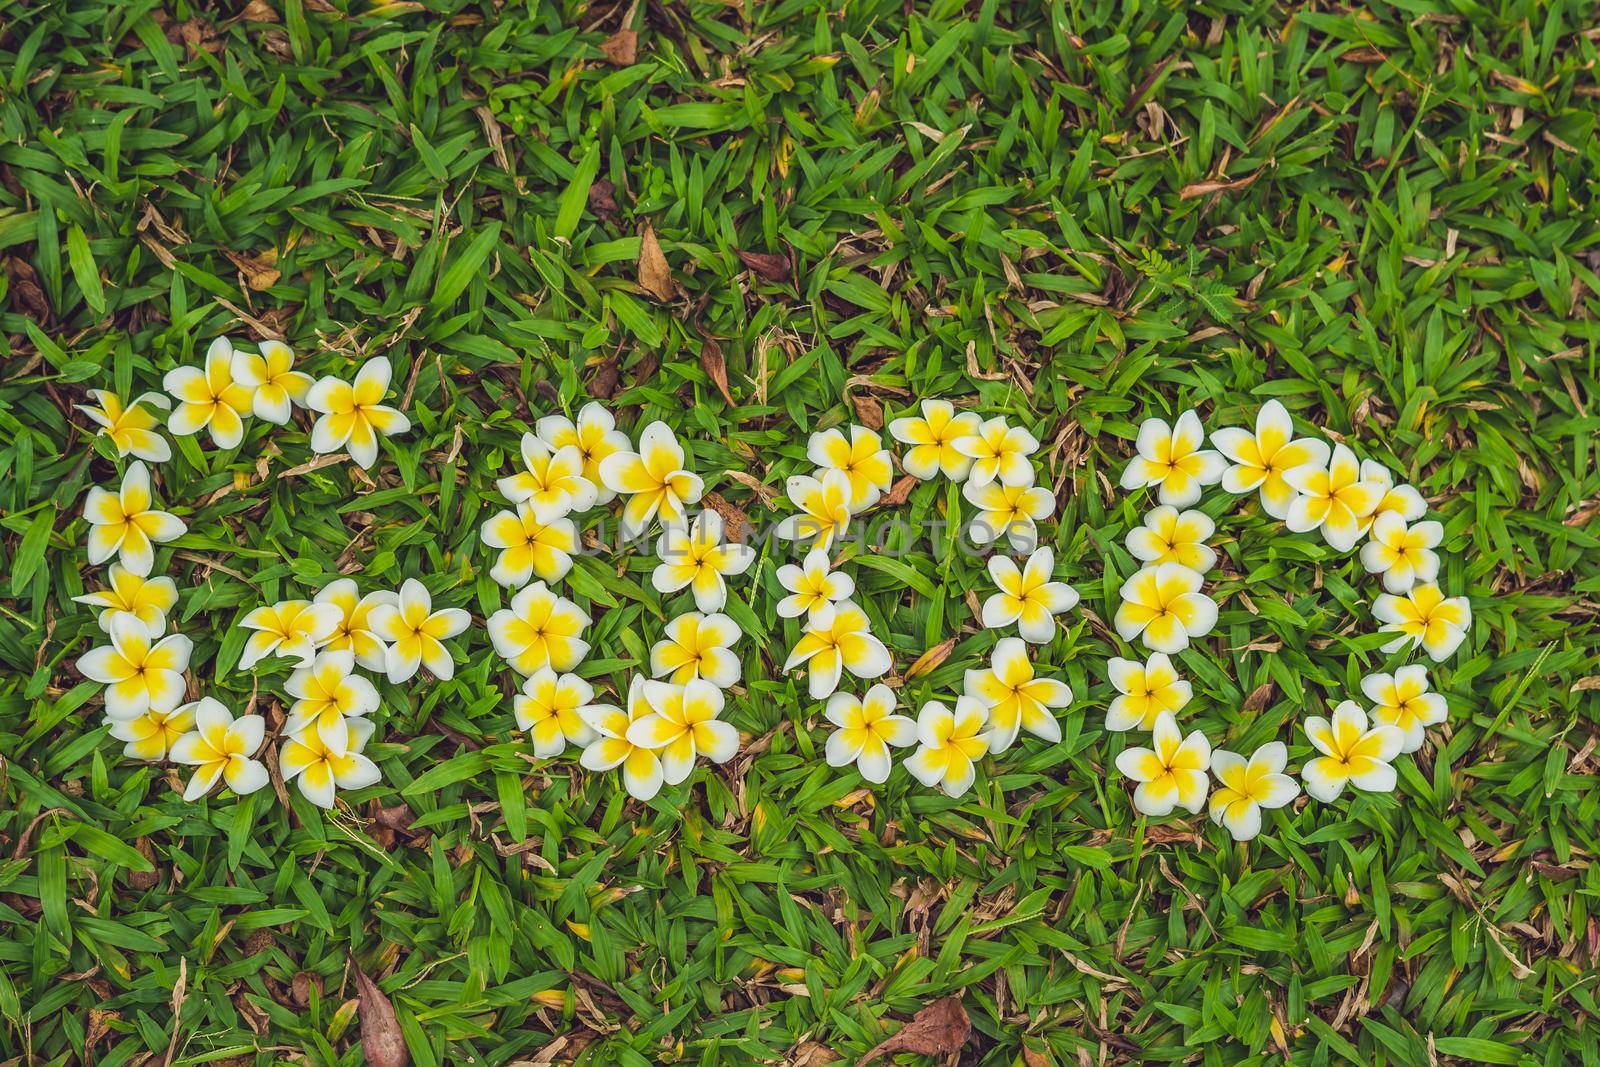 The inscription of a good morning on the grass. Flowers frangipani by galitskaya